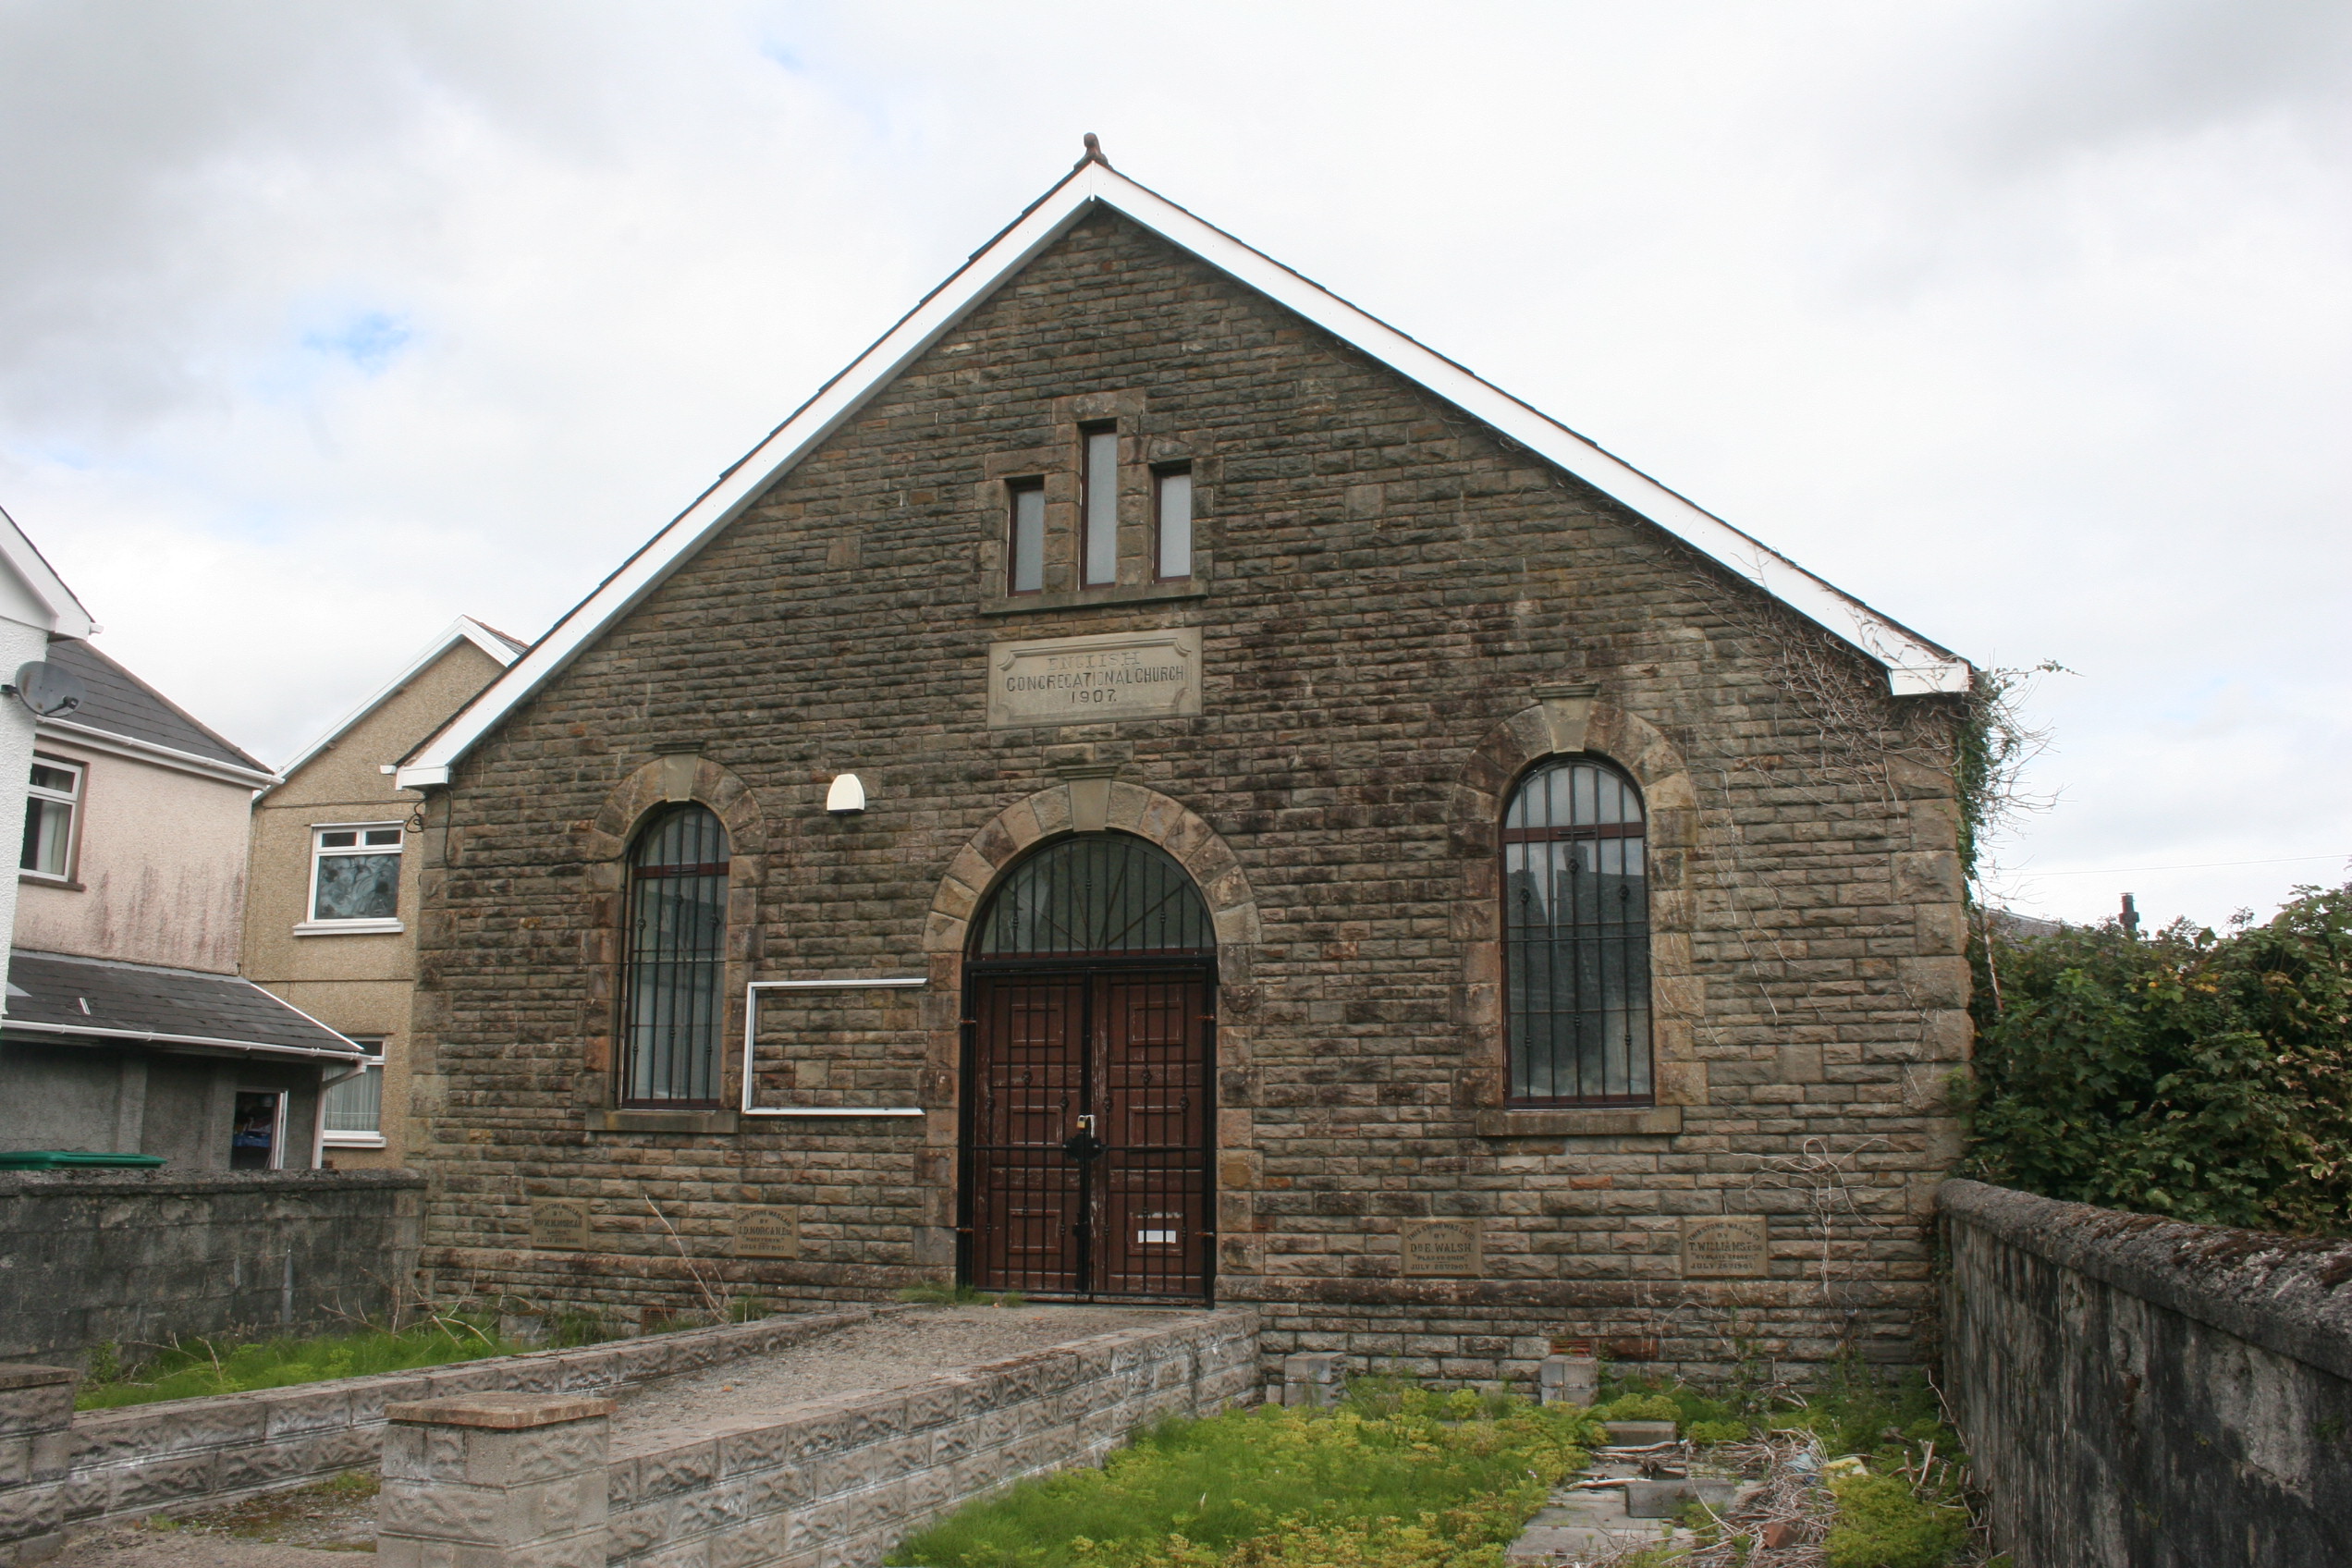 The English Congregational Church, Ystradgynlais